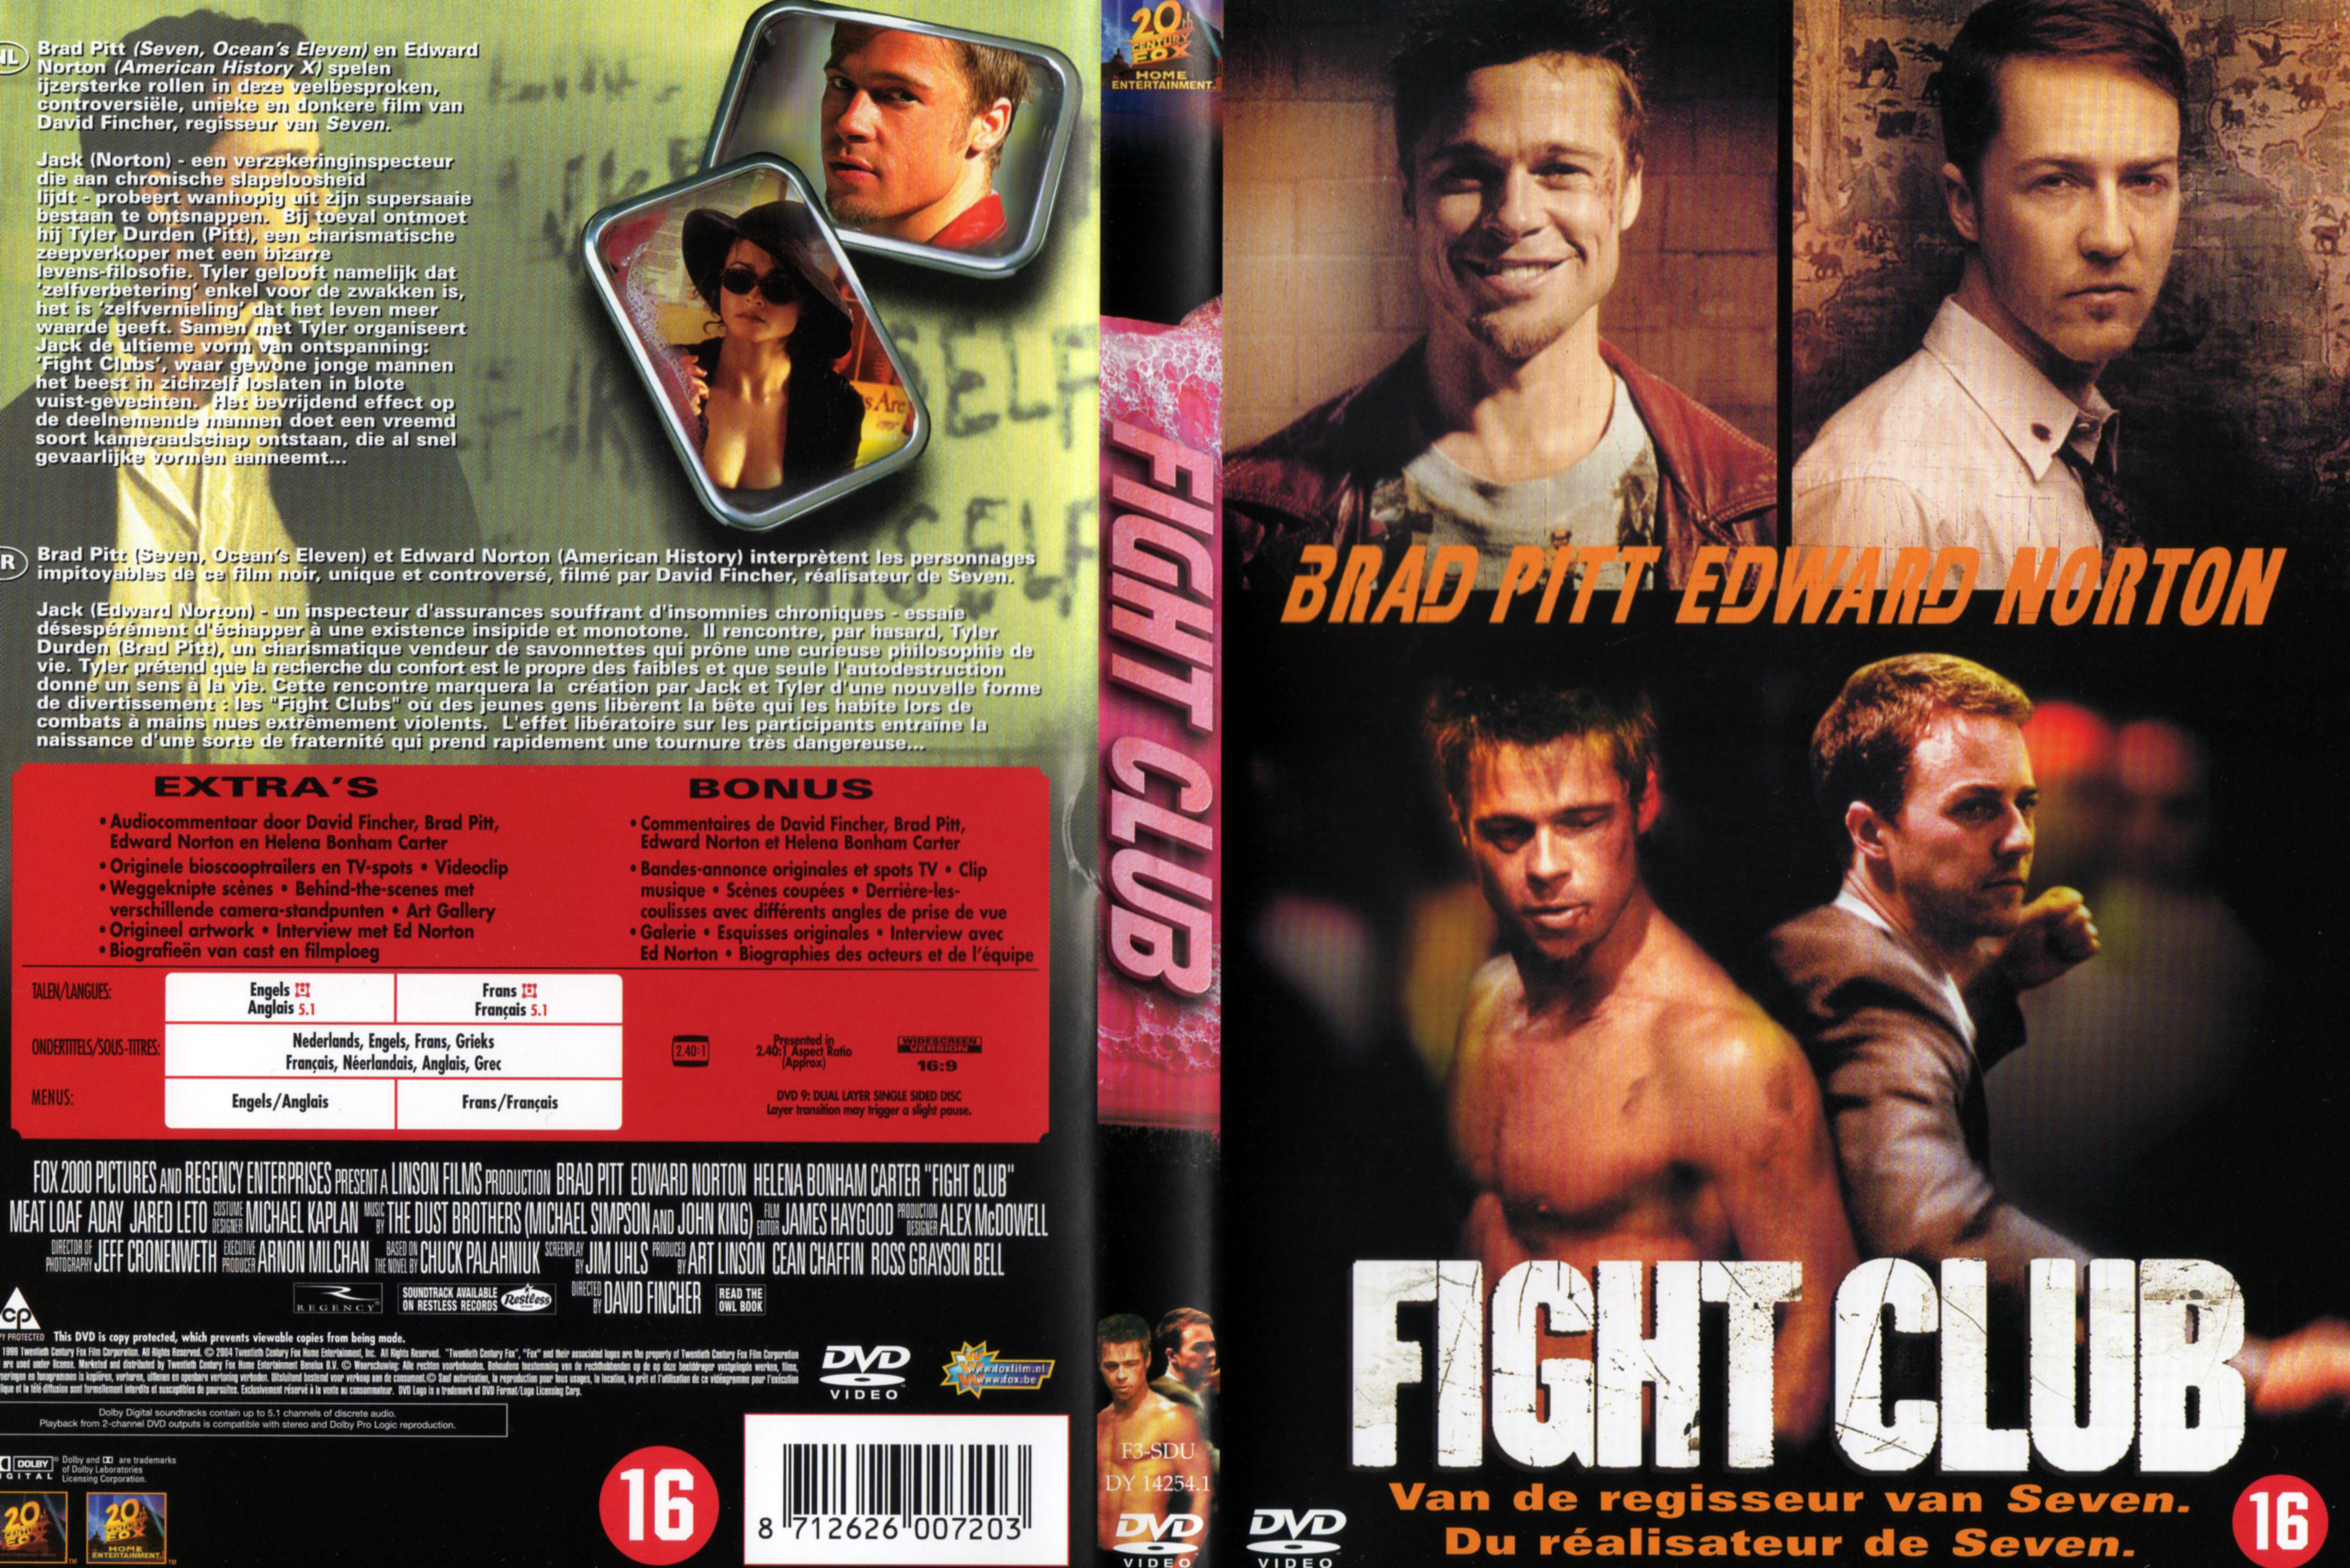 Jaquette DVD Fight club v2